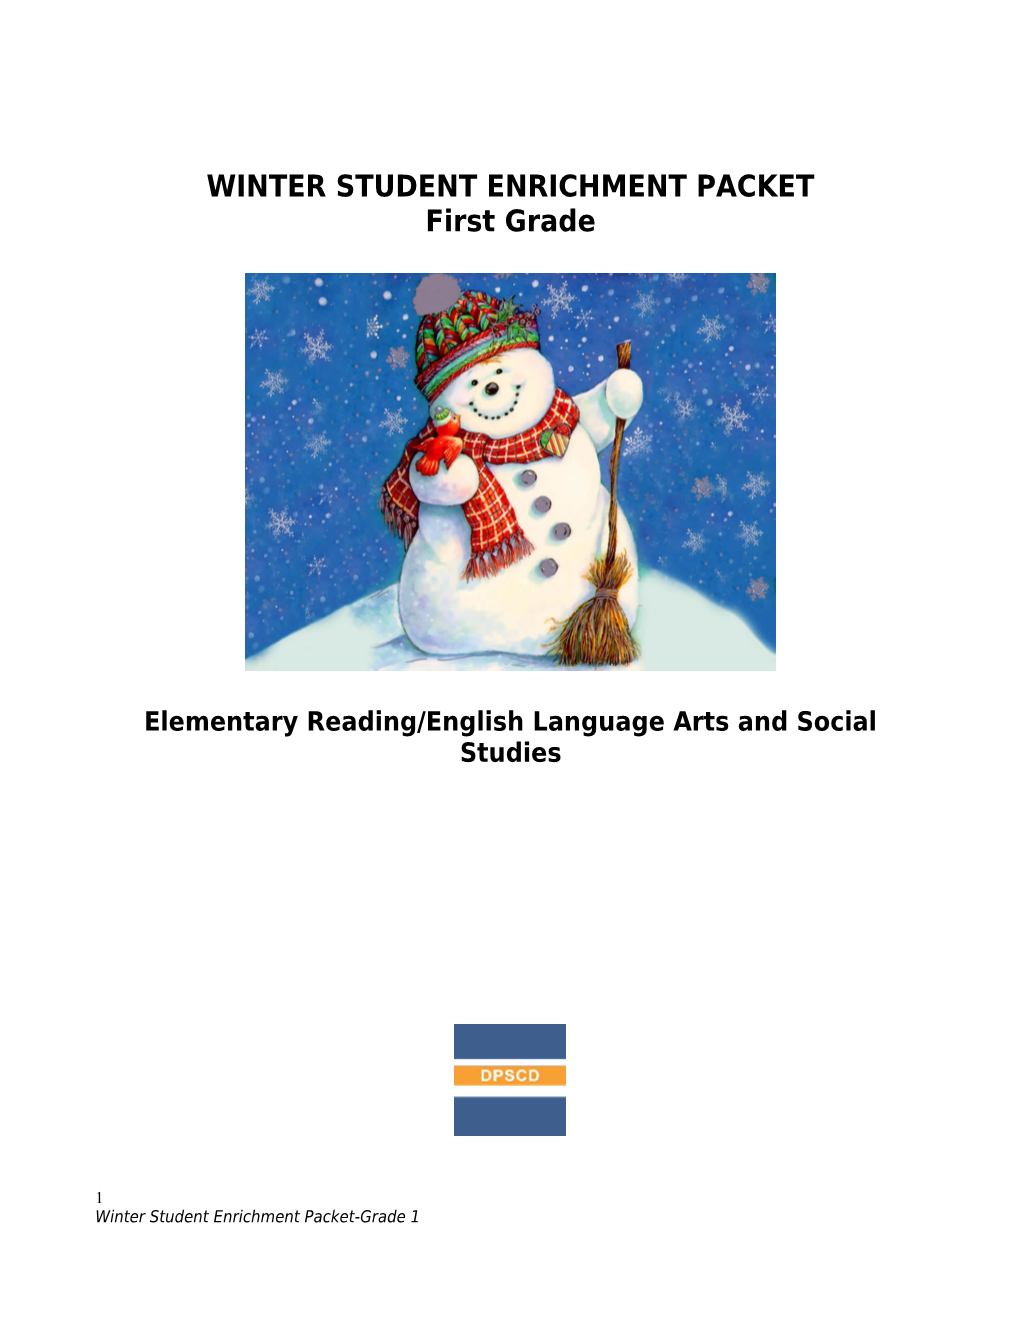 Winter Student Enrichment Packet